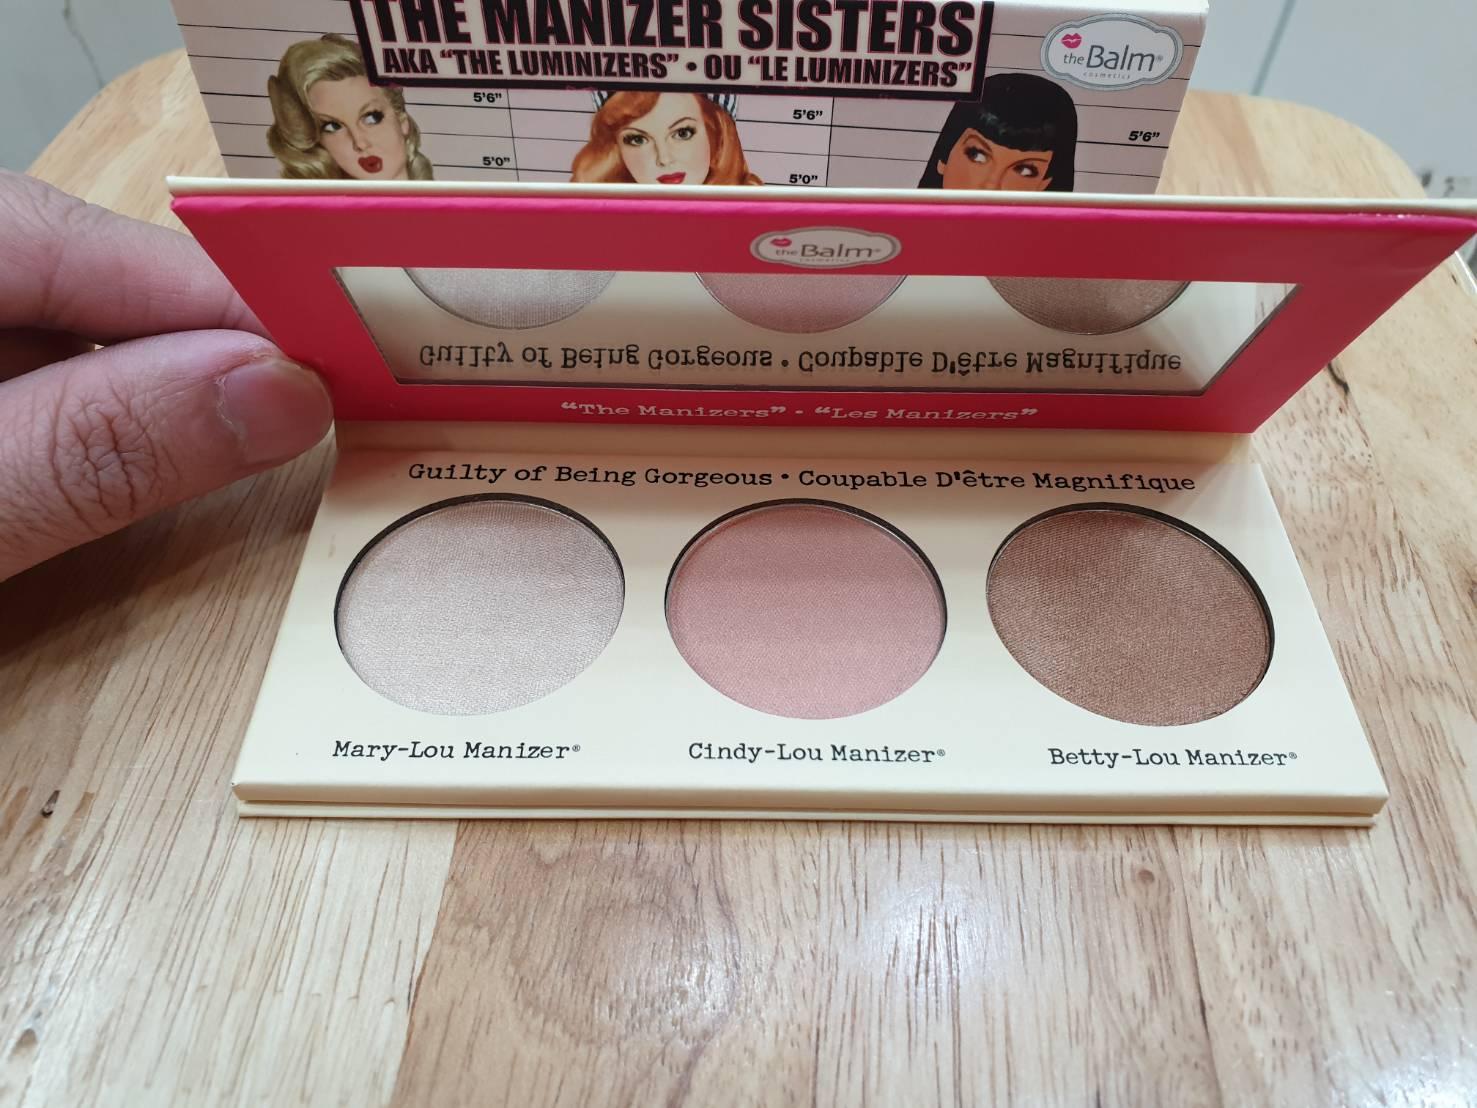 The Manizer Sisters palette (Betty Lou Manizer, Cindy Lou Manizer, Mary Lou Manizer) 3x3g พาเลตต์